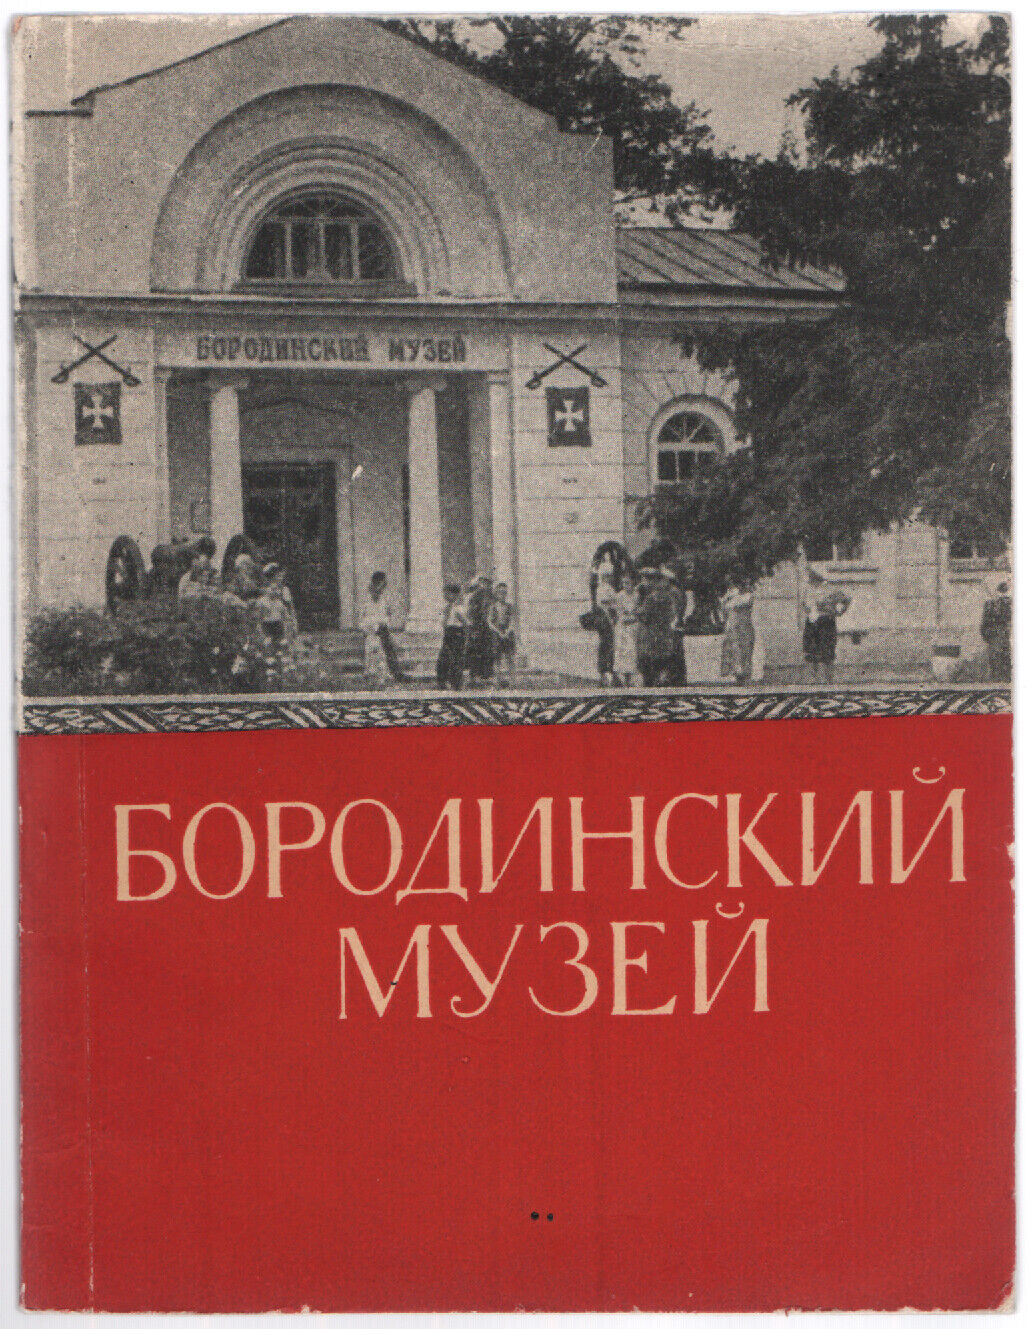 1960 BORODINO MUSEUM Guide, Patriotic War of 1812, Napoleonic Wars, Russian Book